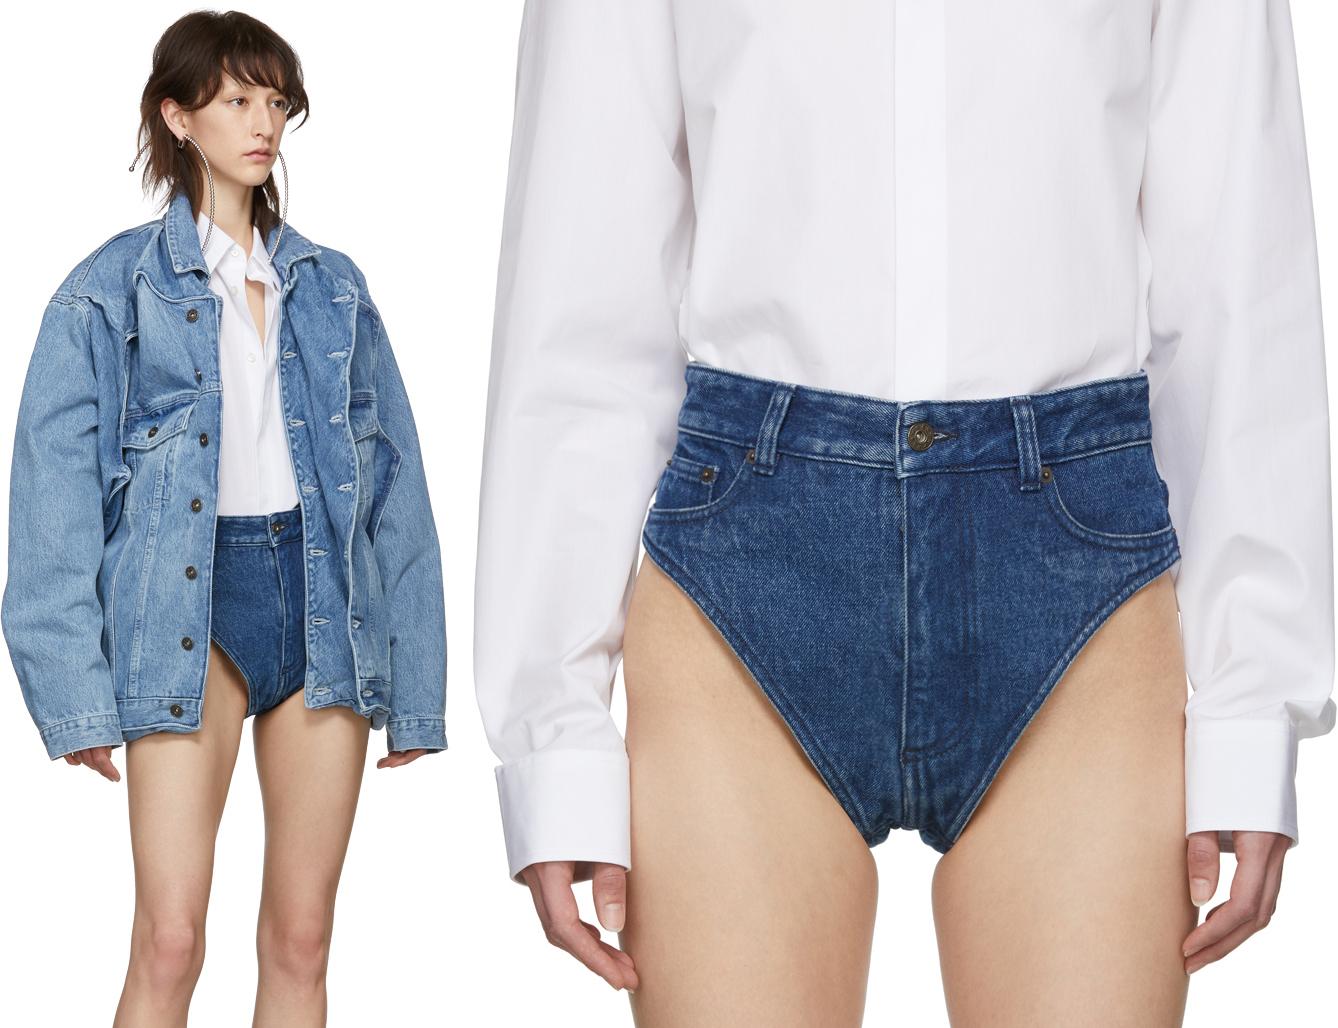 Fashion brand mocked for $330 denim panties: 'Take your